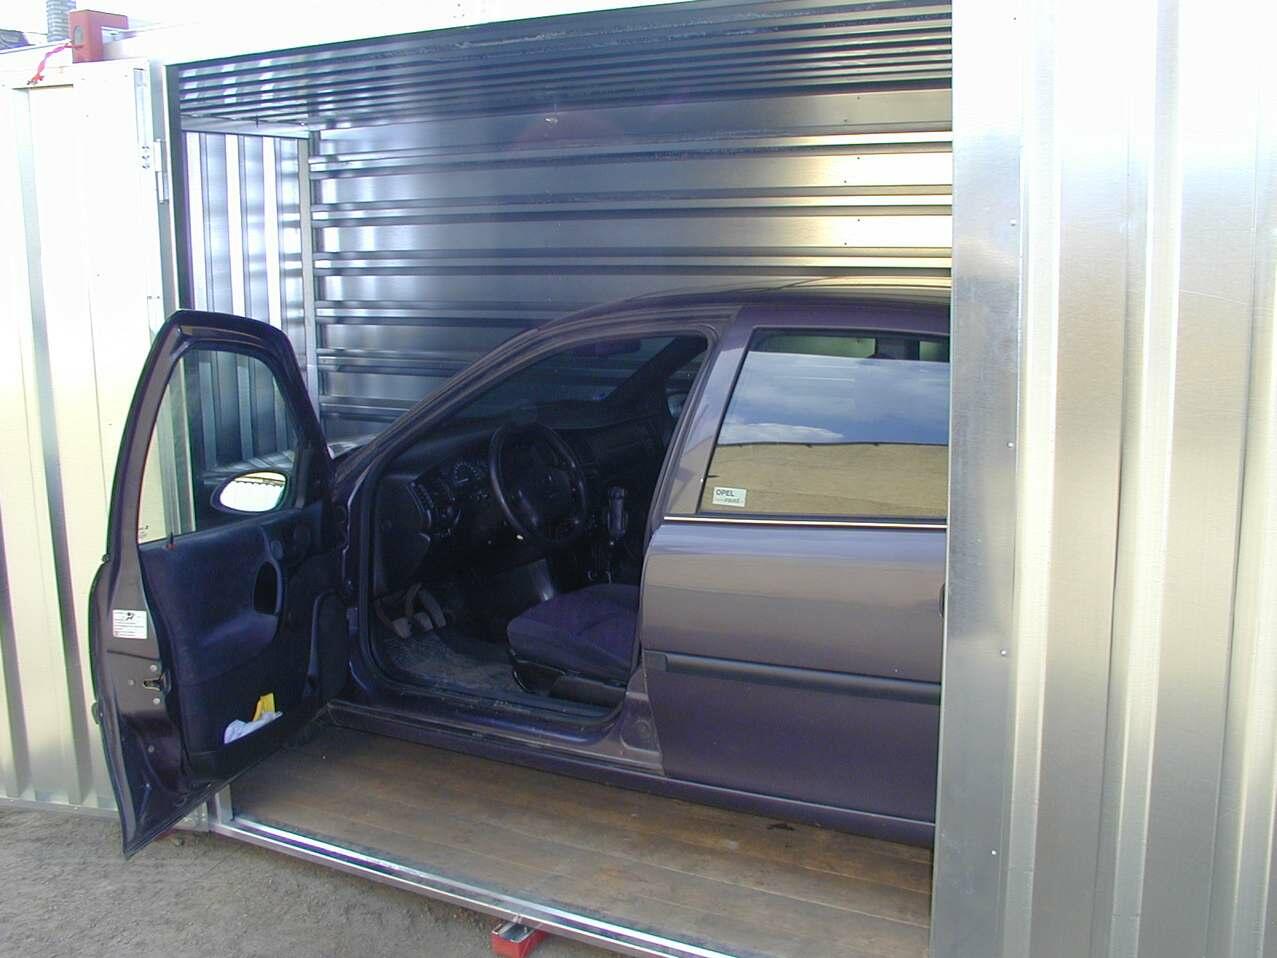 Kovobel - Carport - 6m Car Storage Container - Secure Vehicle Garage